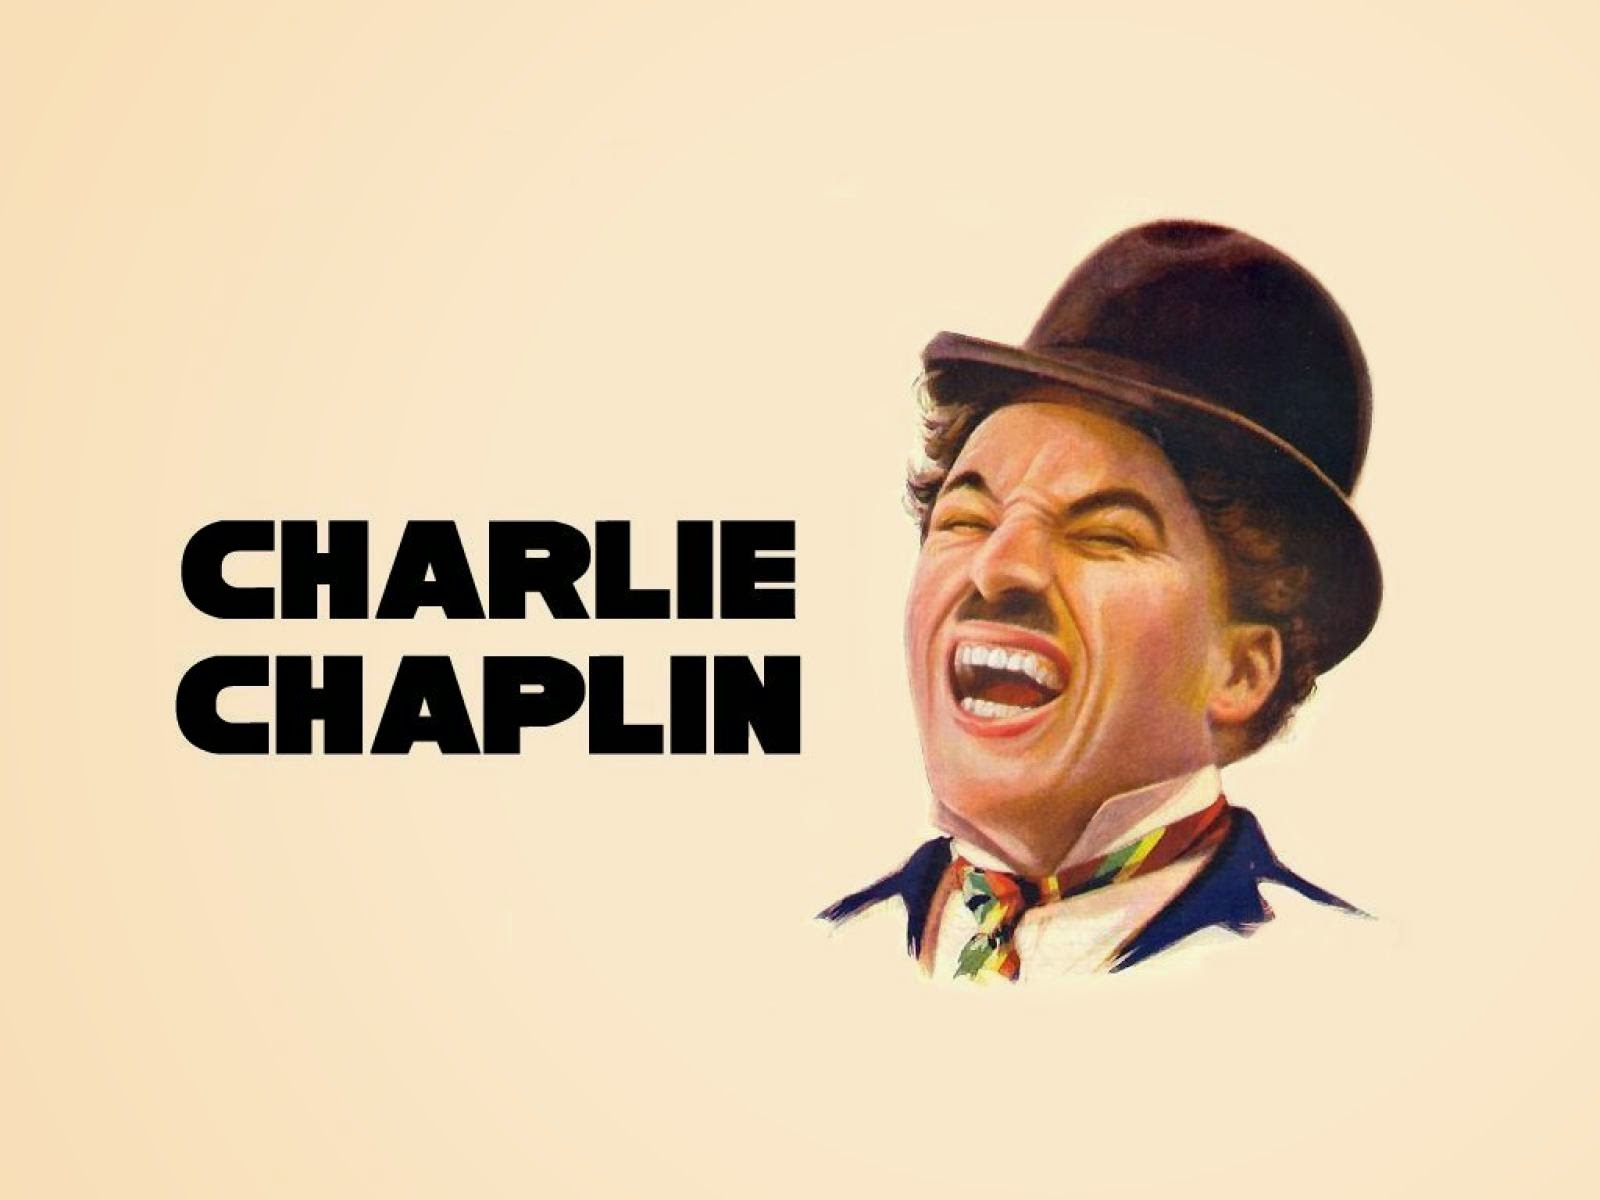 Charlie Chaplin Quotes in Hindi